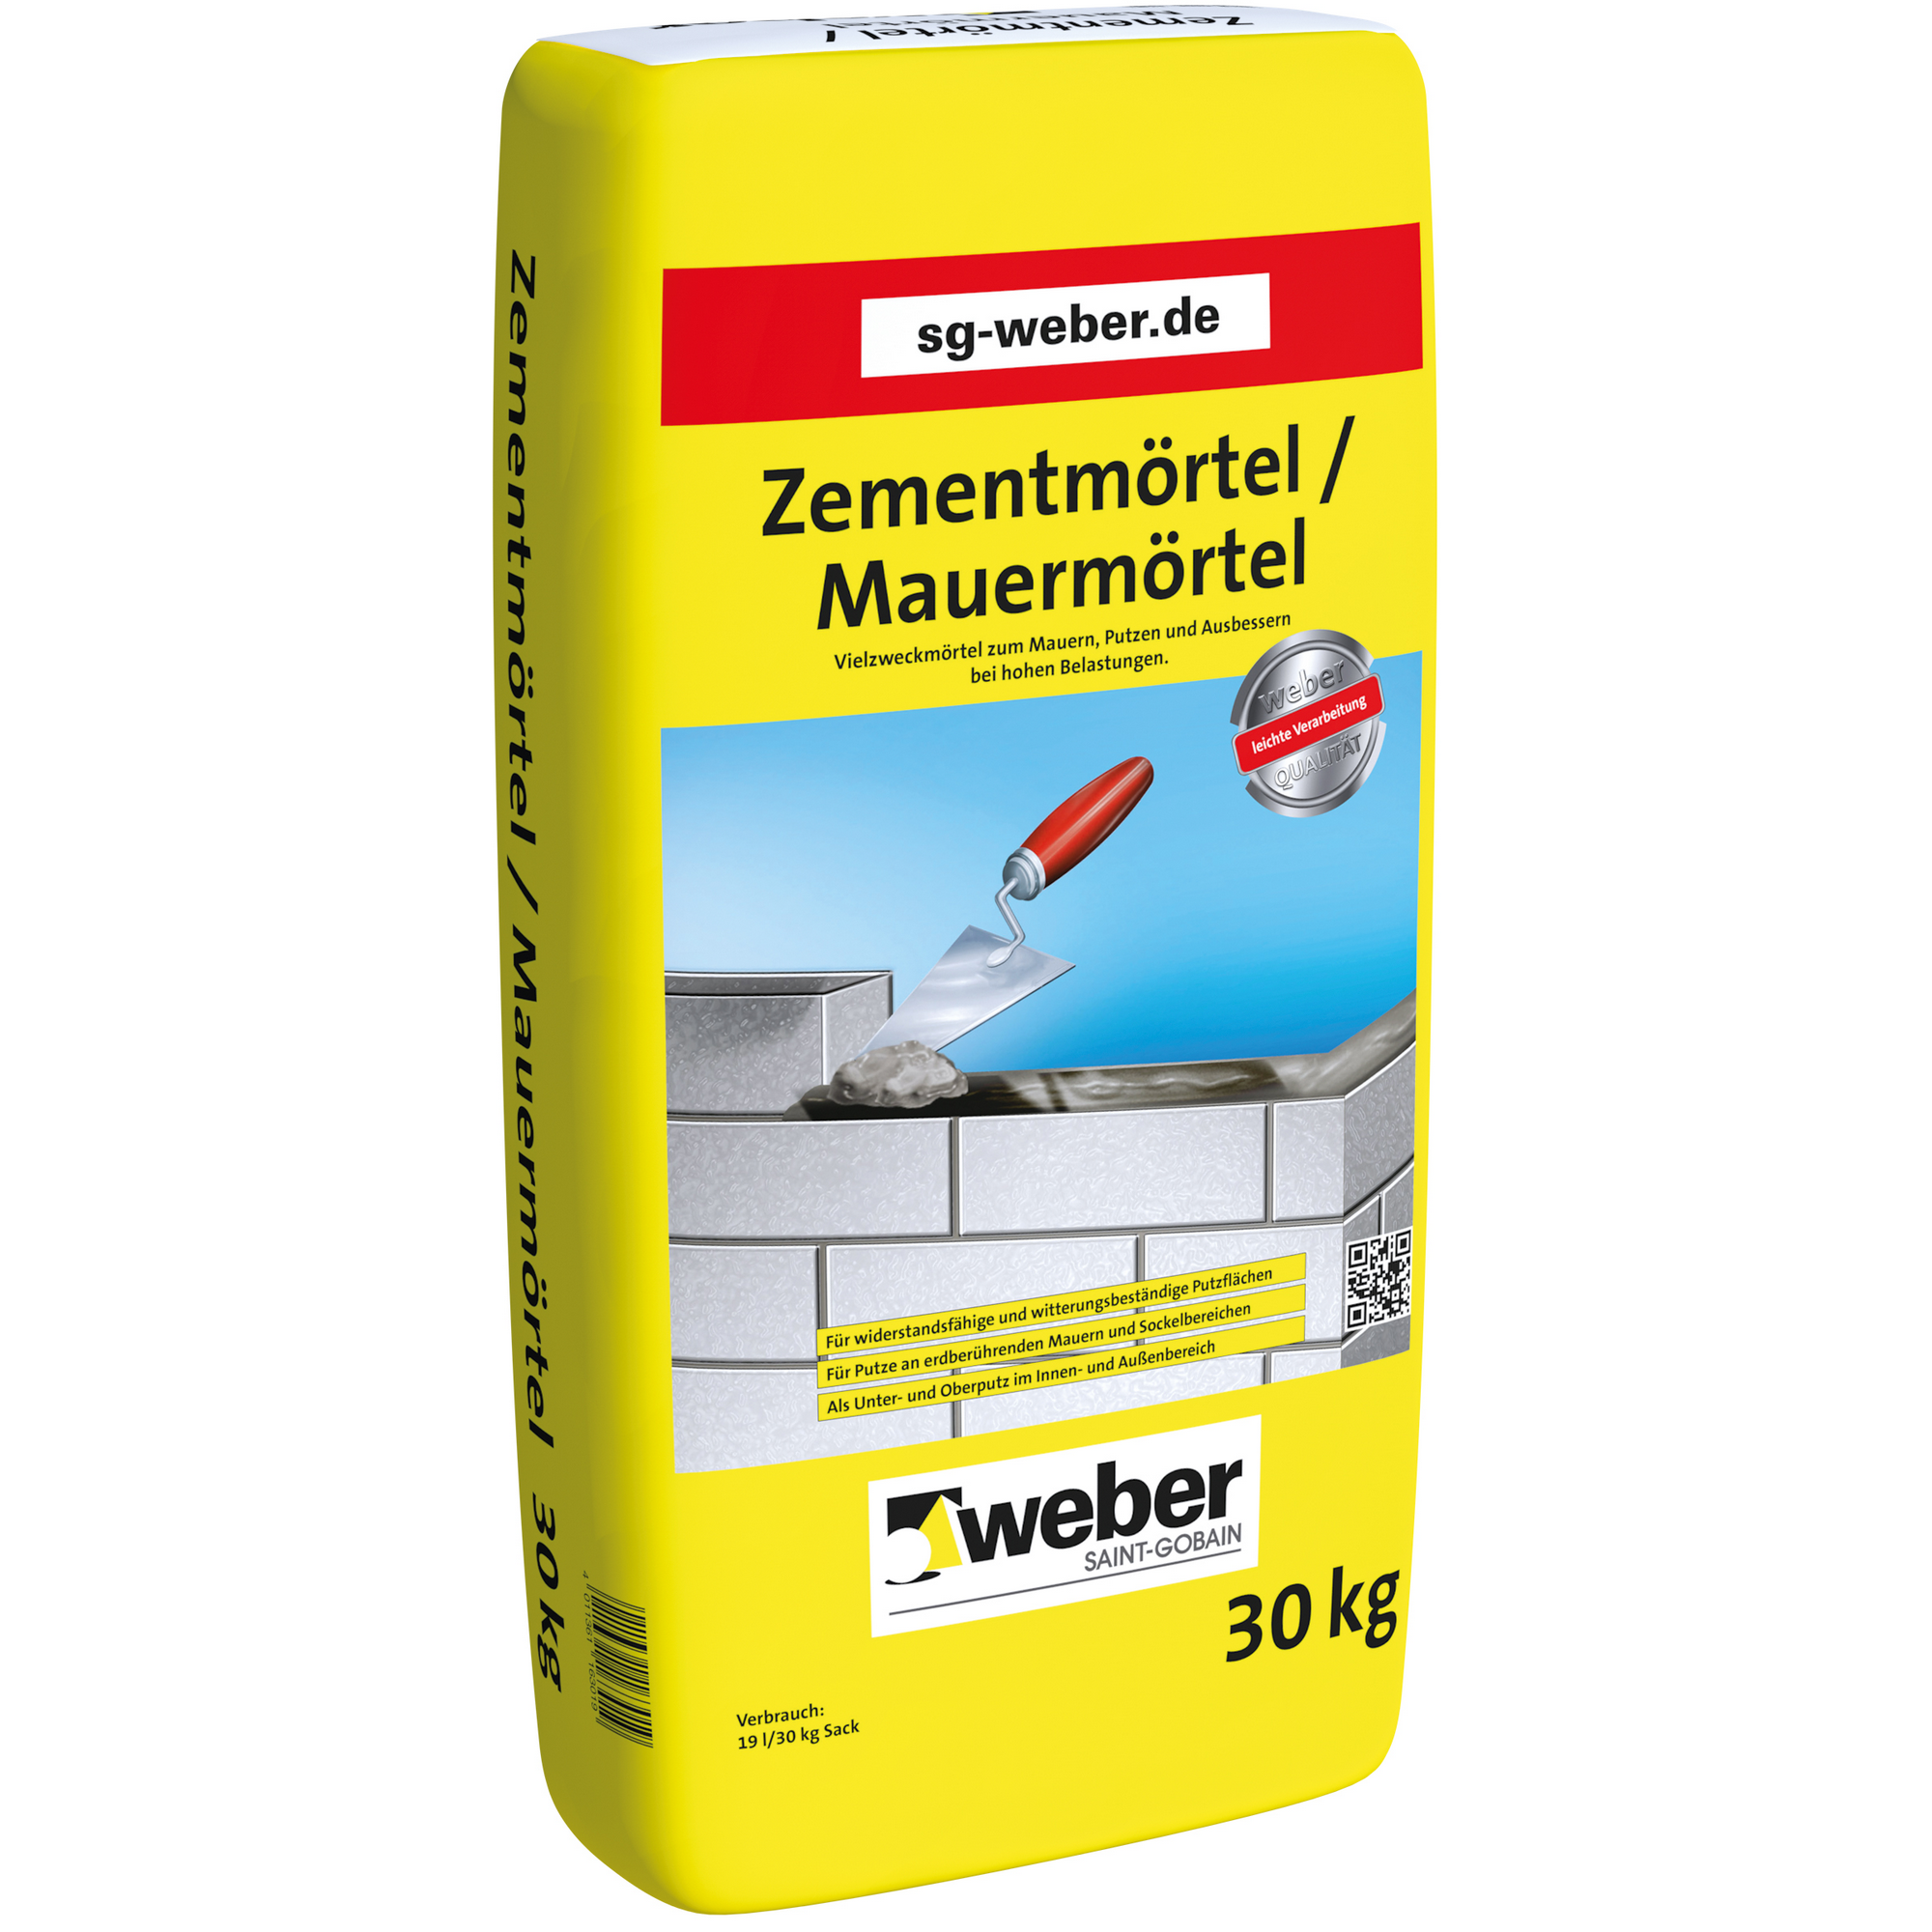 Zement- und Mauermörtel 30 kg + product picture